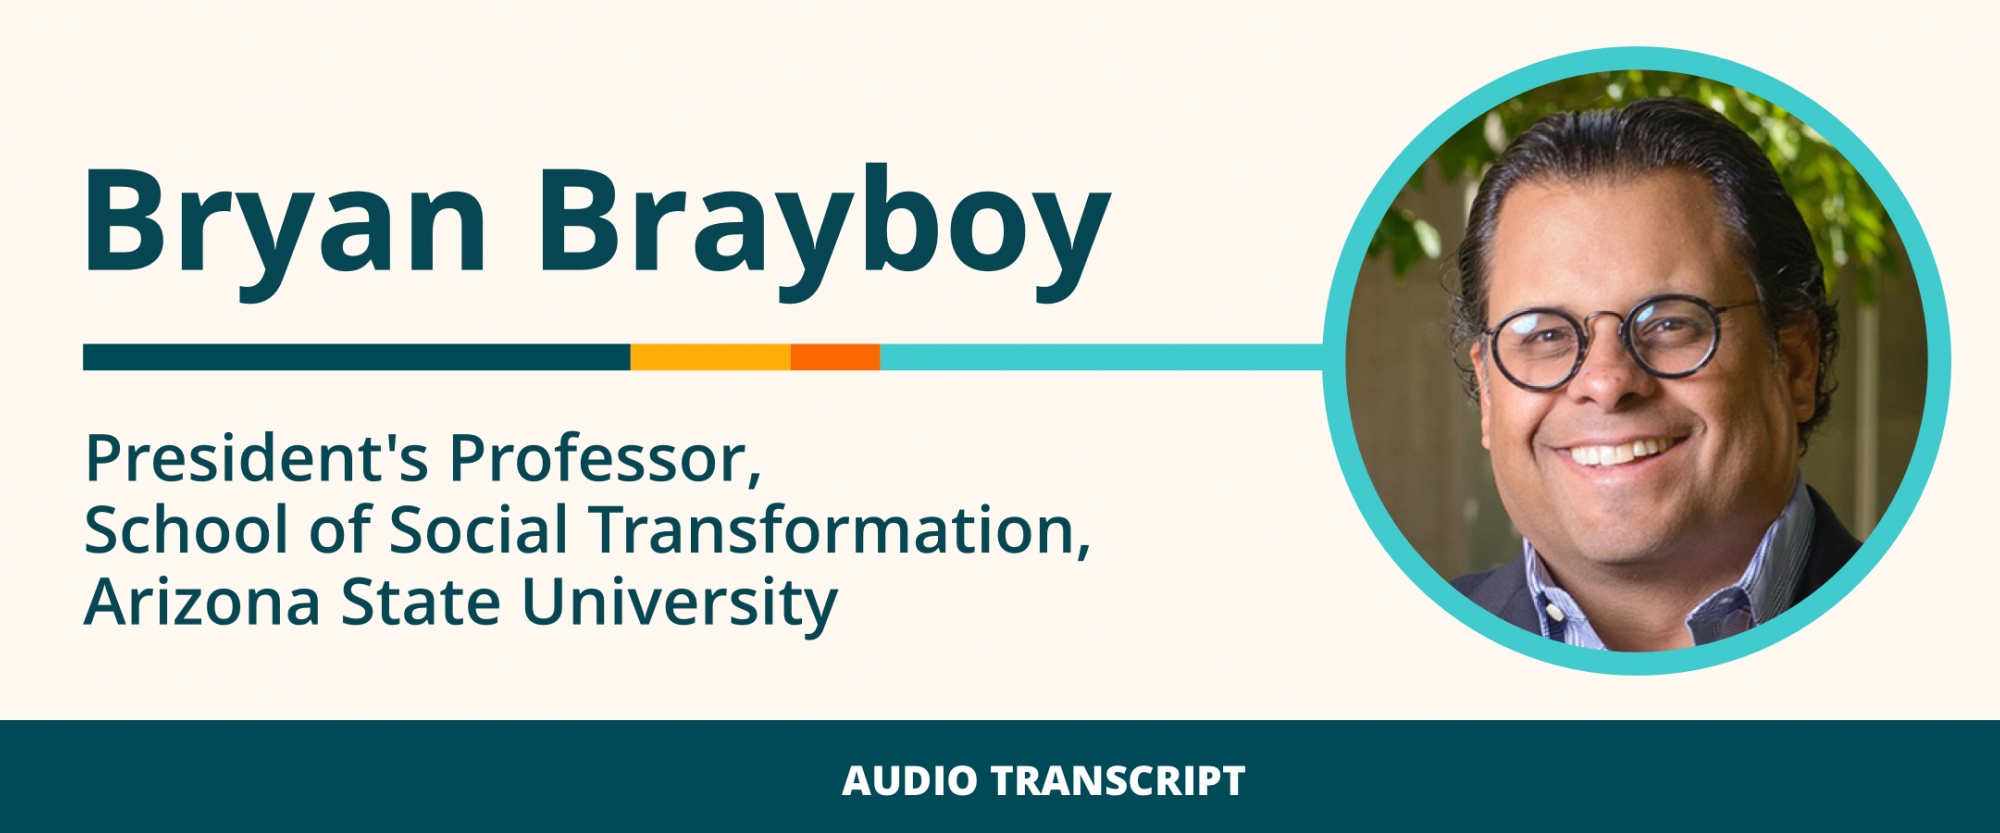 Scholarship to Practice 9/2/21: Transcript of Conversation With Bryan Brayboy, President's Professor, School of Social Transformation, Arizona State University